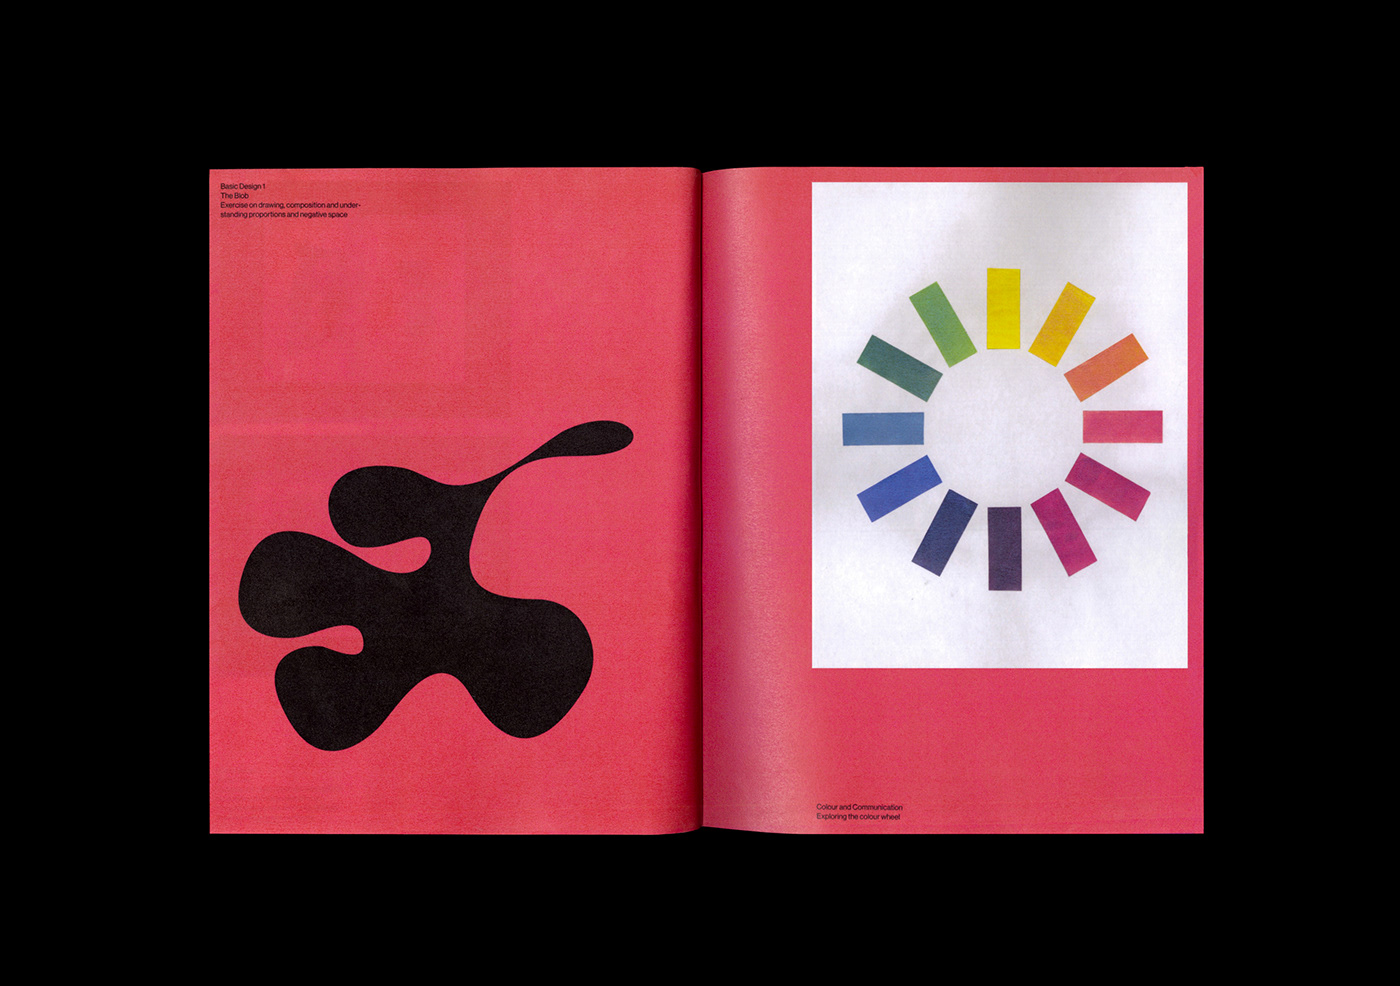 helvetica swiss Guide color book design information modernist grid solid color Layout